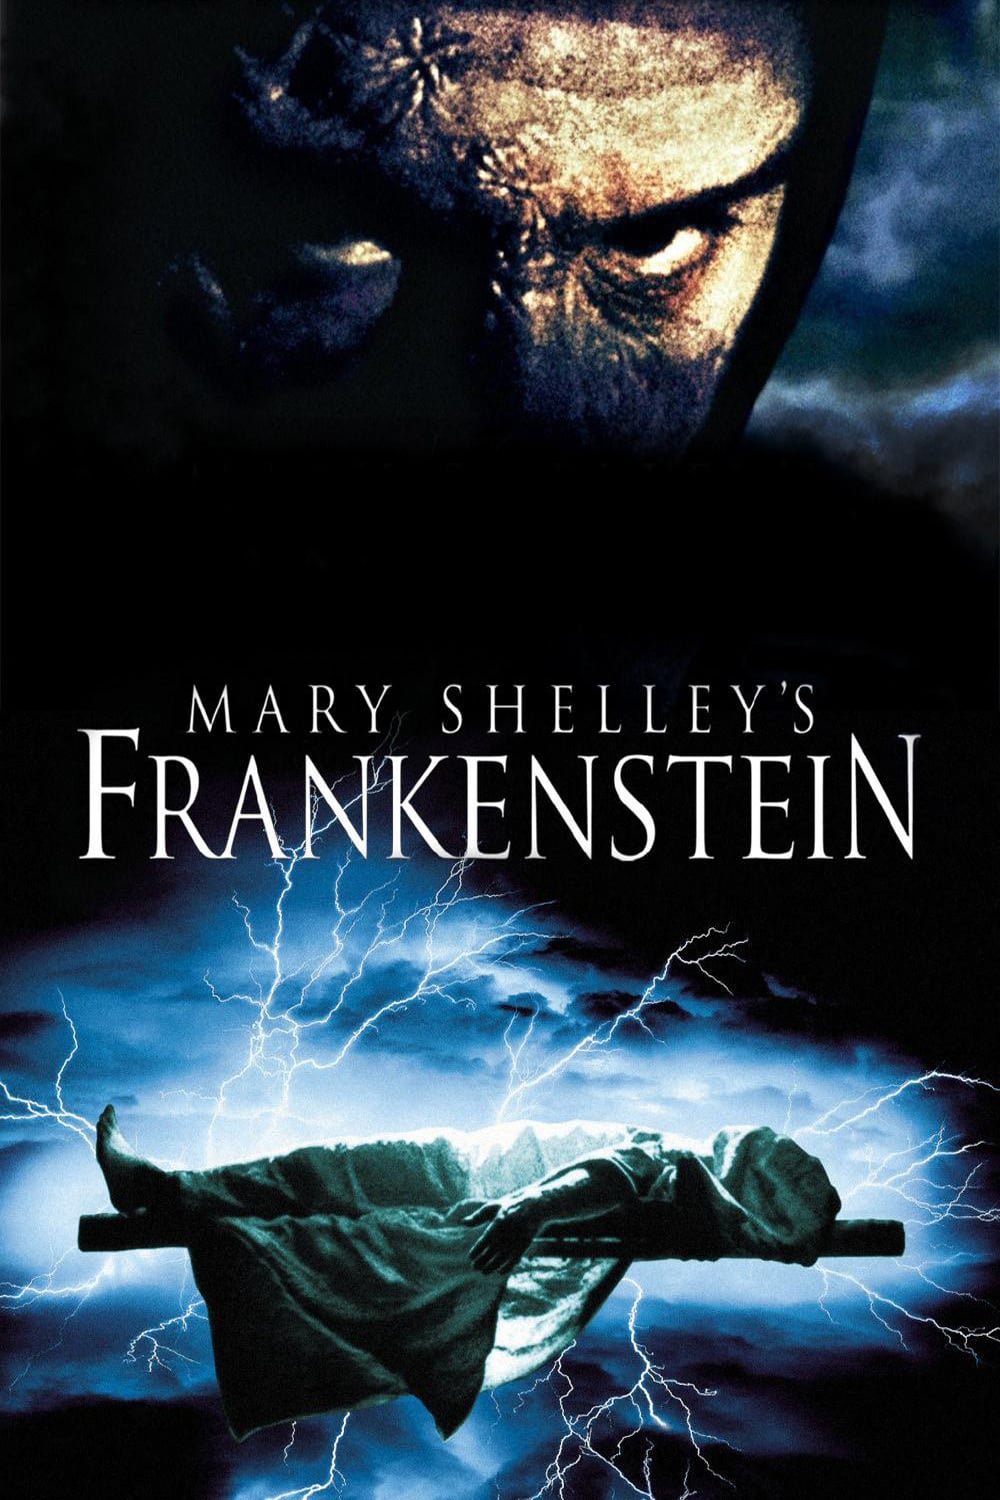 MARY SHELLEYS FRANKENSTEIN